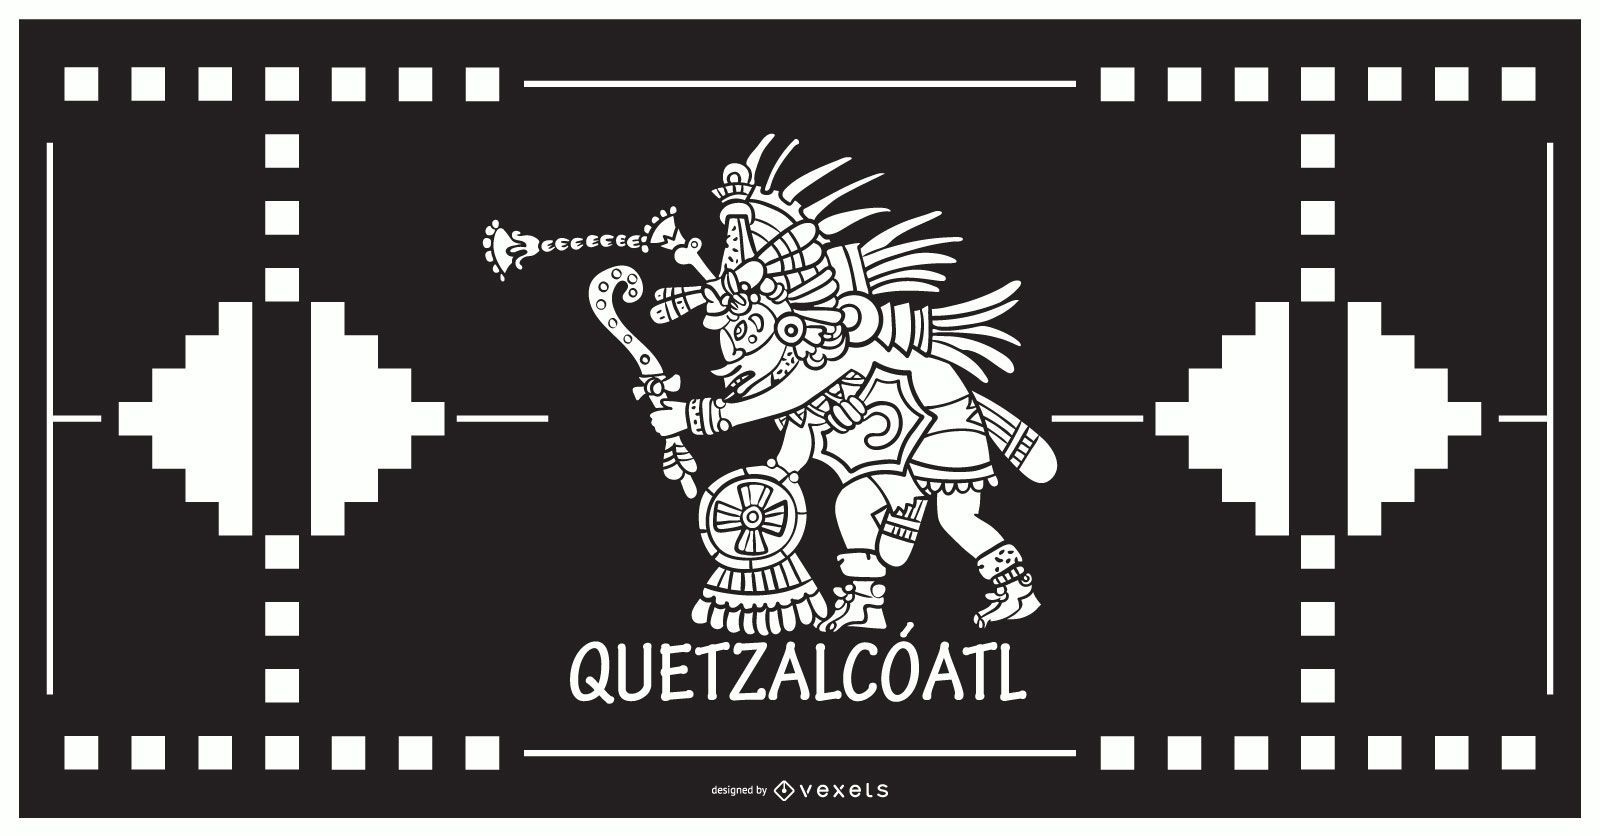 quetzalcoatl design